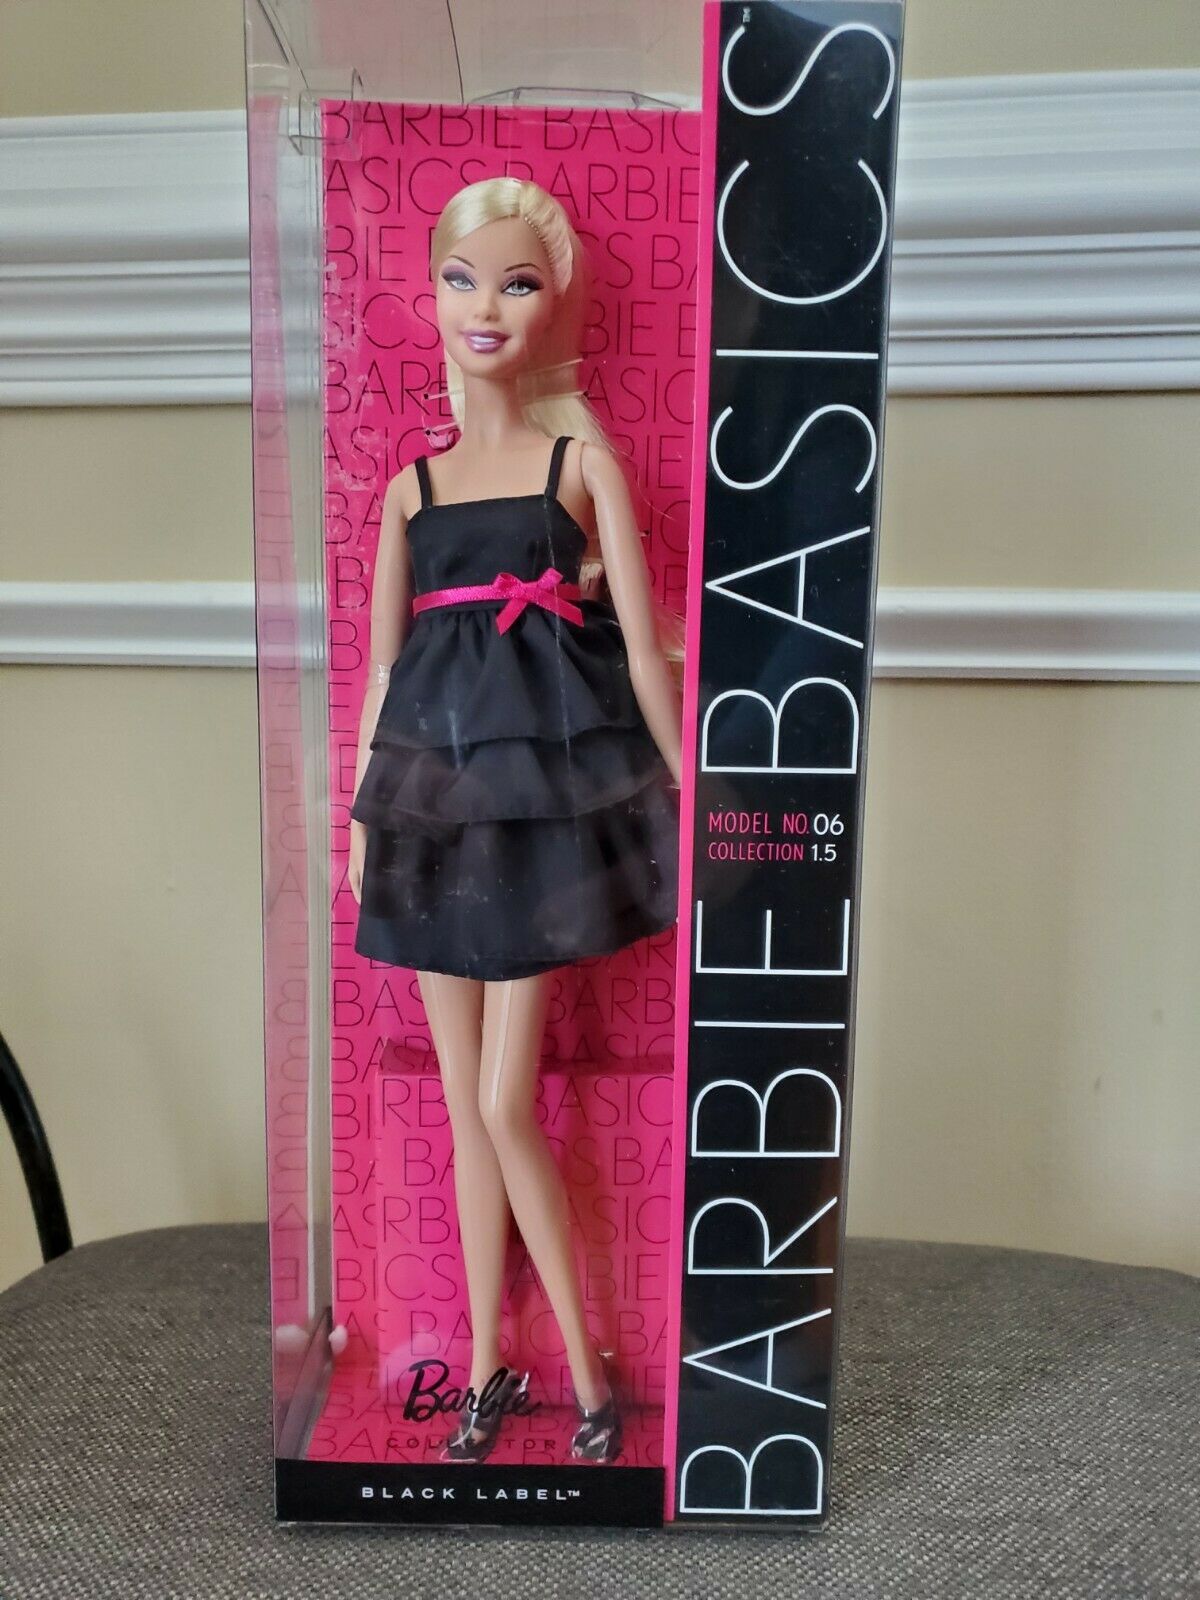 Barbie Collector Black Label Barbie Basics Model N0.06 Collection 1.5 Doll Nrfb